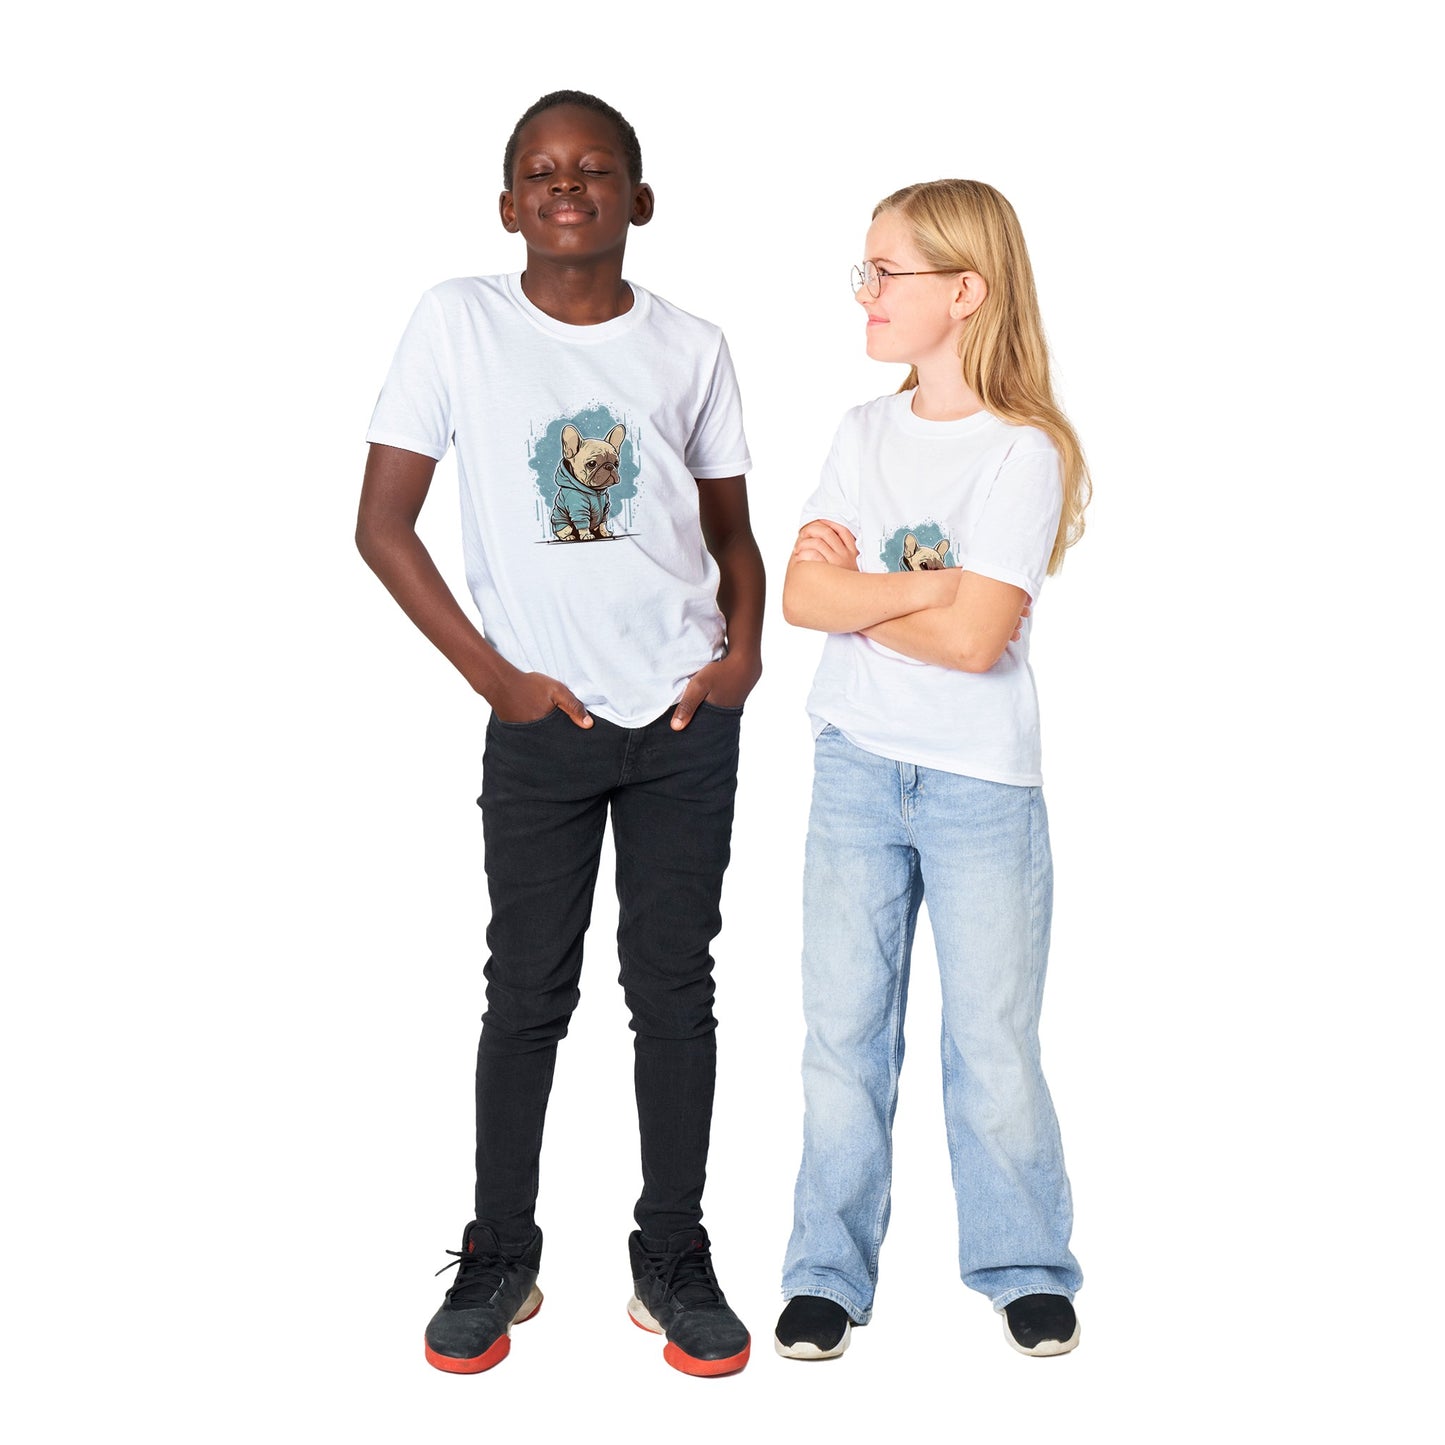 Children's T-shirt - Light French Bulldog light Hoodie Artwork - Classic Children's T-shirt